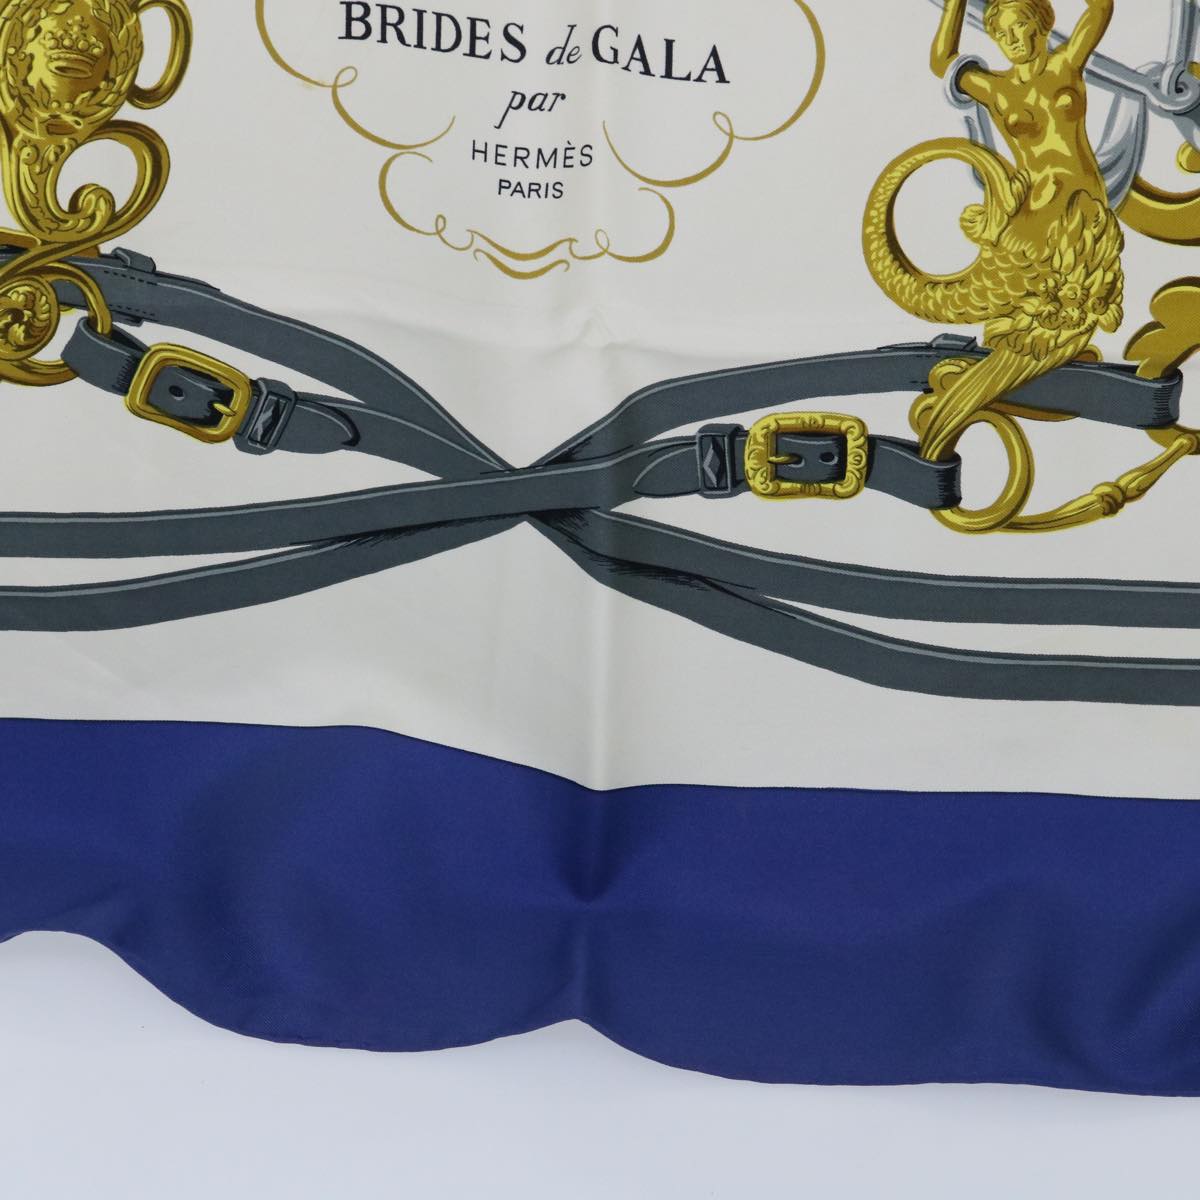 HERMES Carre 90 BRIDES de GALA Scarf Silk Blue White Auth bs8061